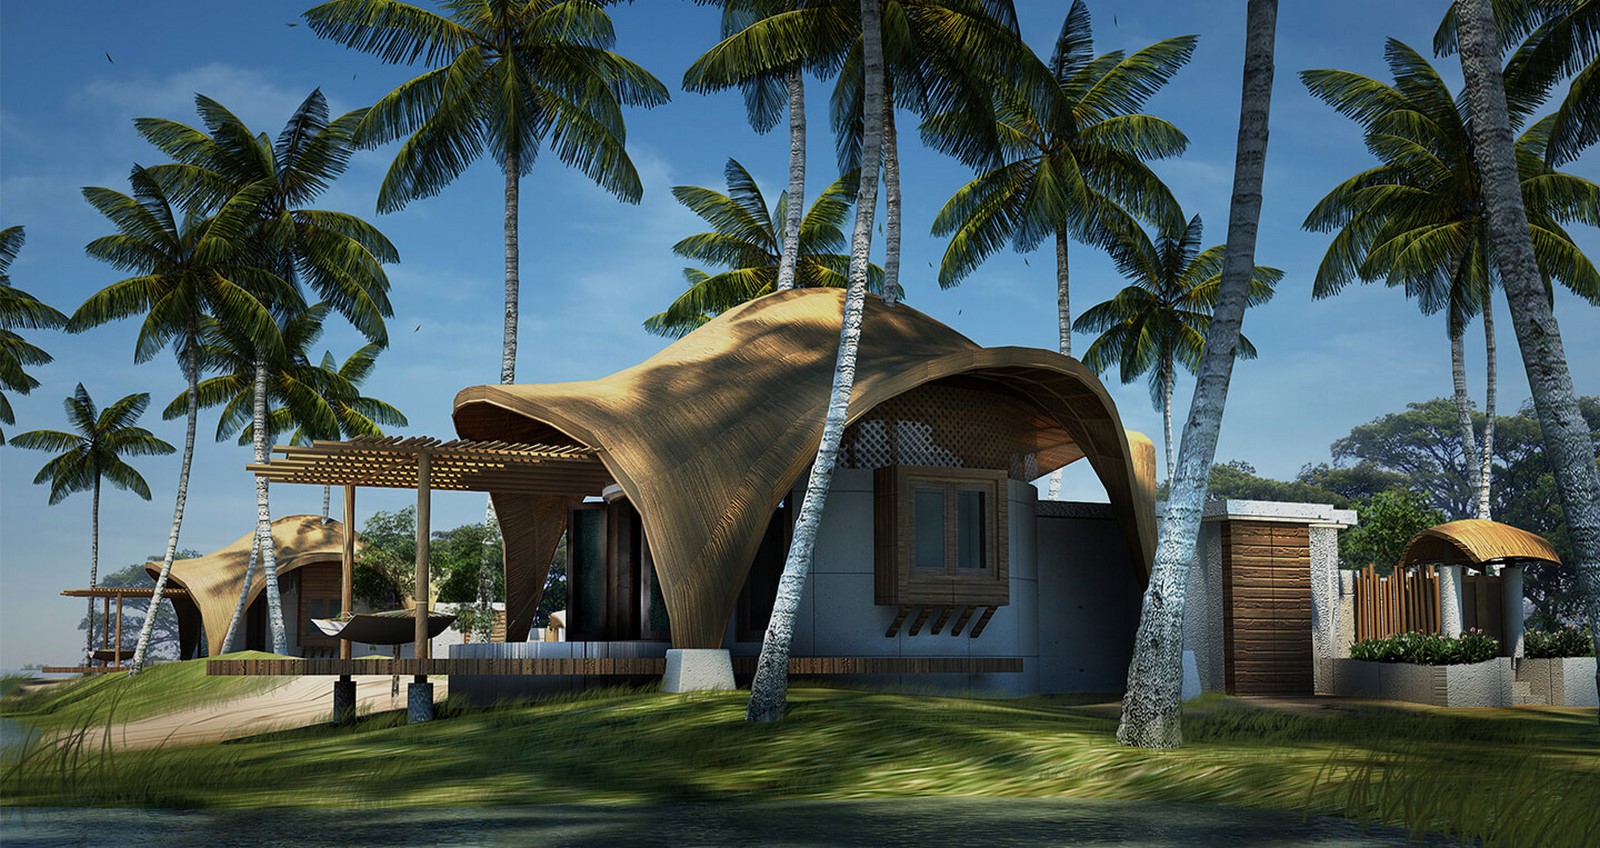 Kumarakom Resort by Morphogenesis: Luxurious and Innovative Resort - Sheet7